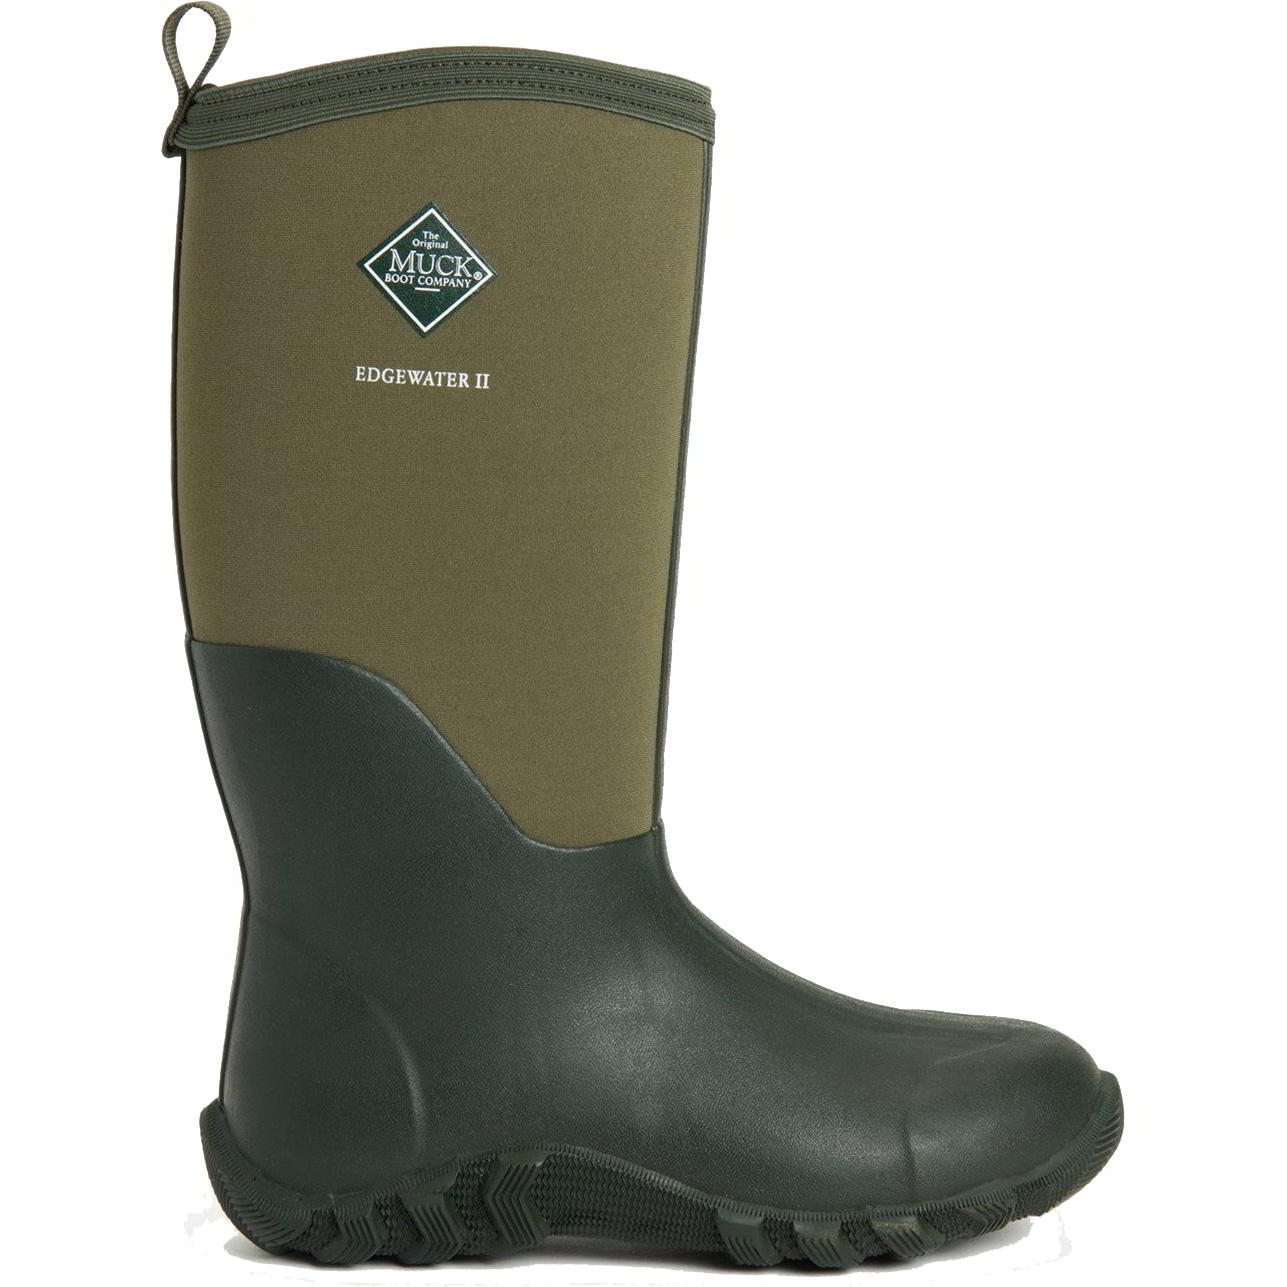 Muck Boots Men's Edgewater II Neoprene Wellies Rain Boots - UK 8